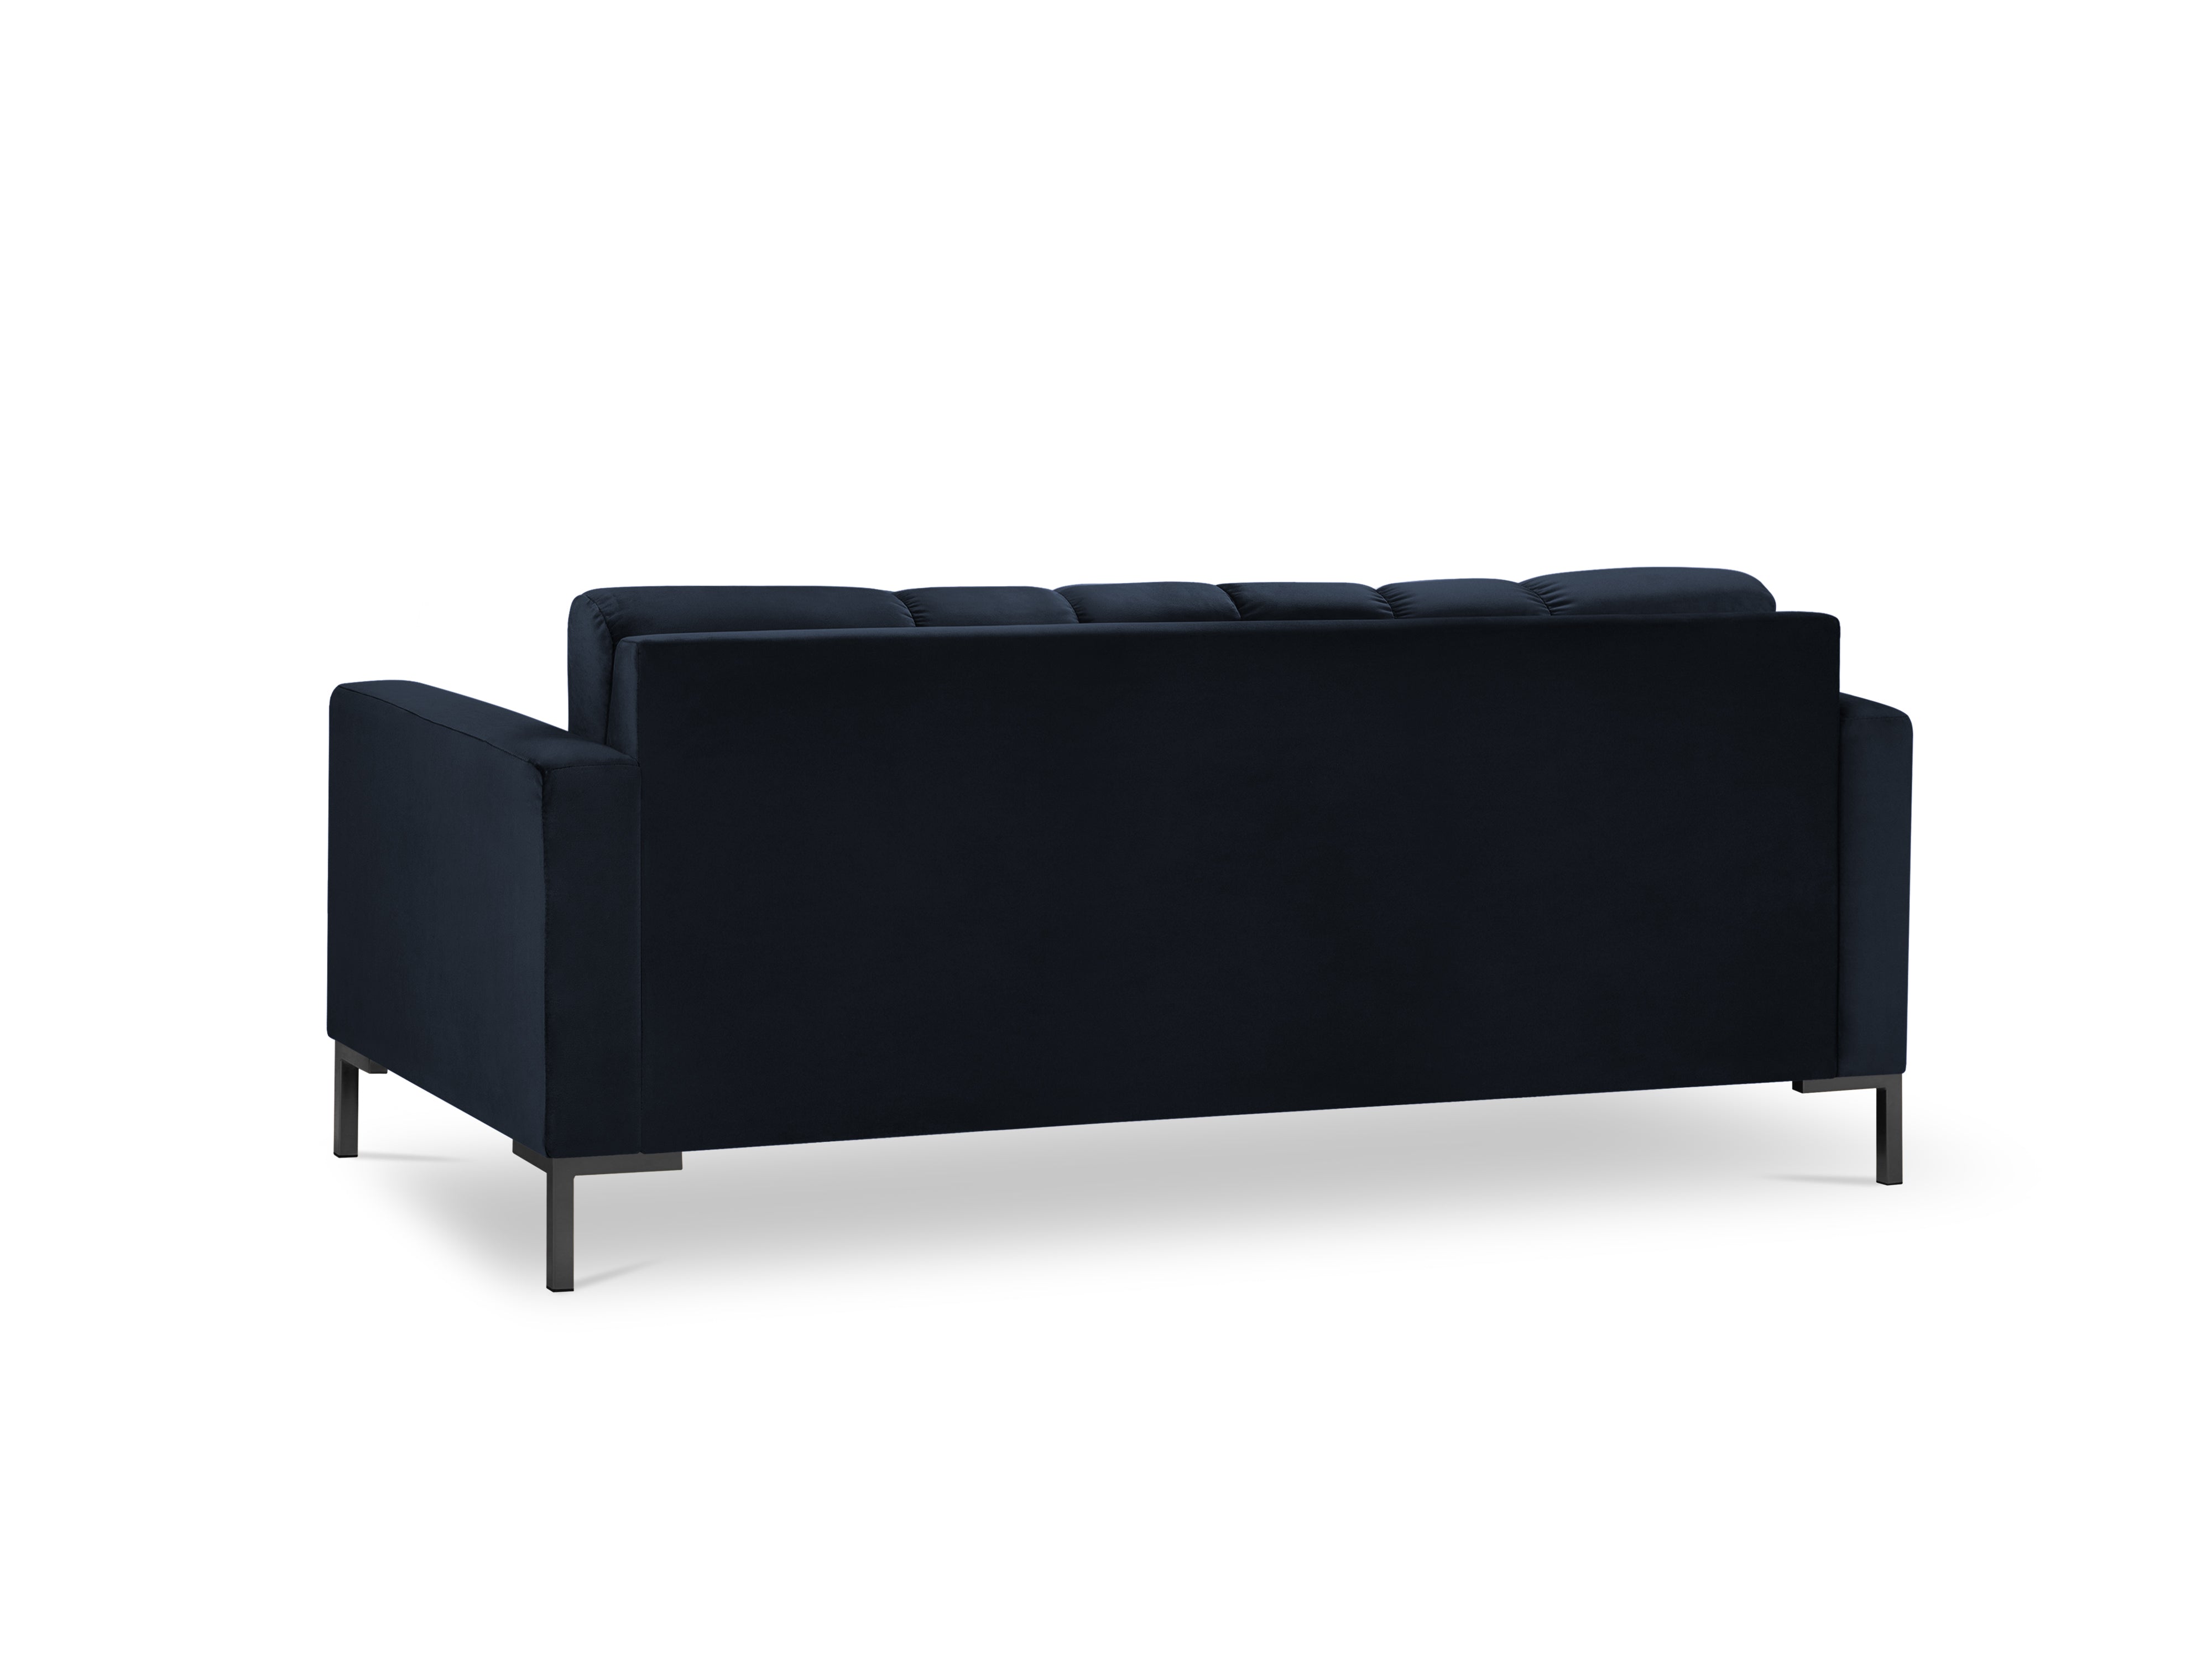 Dark blue sofa with a black base